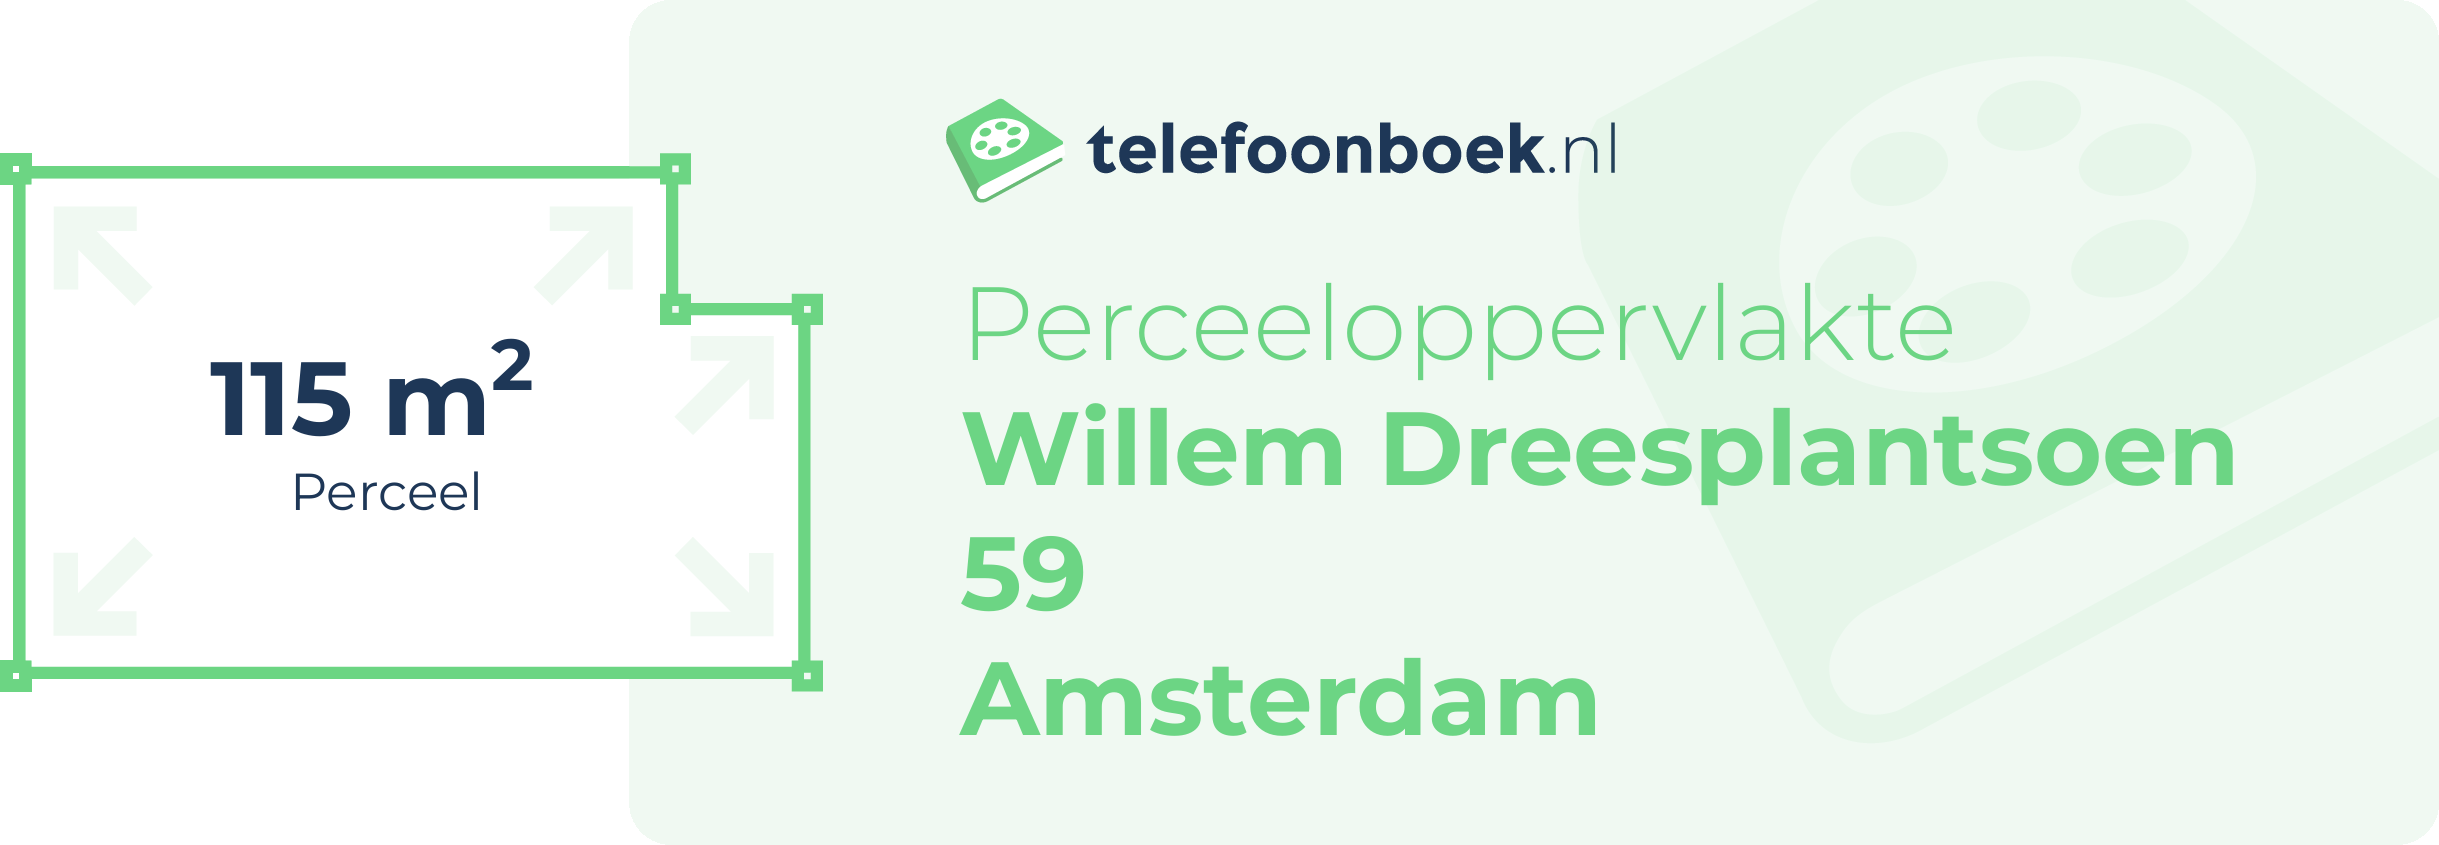 Perceeloppervlakte Willem Dreesplantsoen 59 Amsterdam